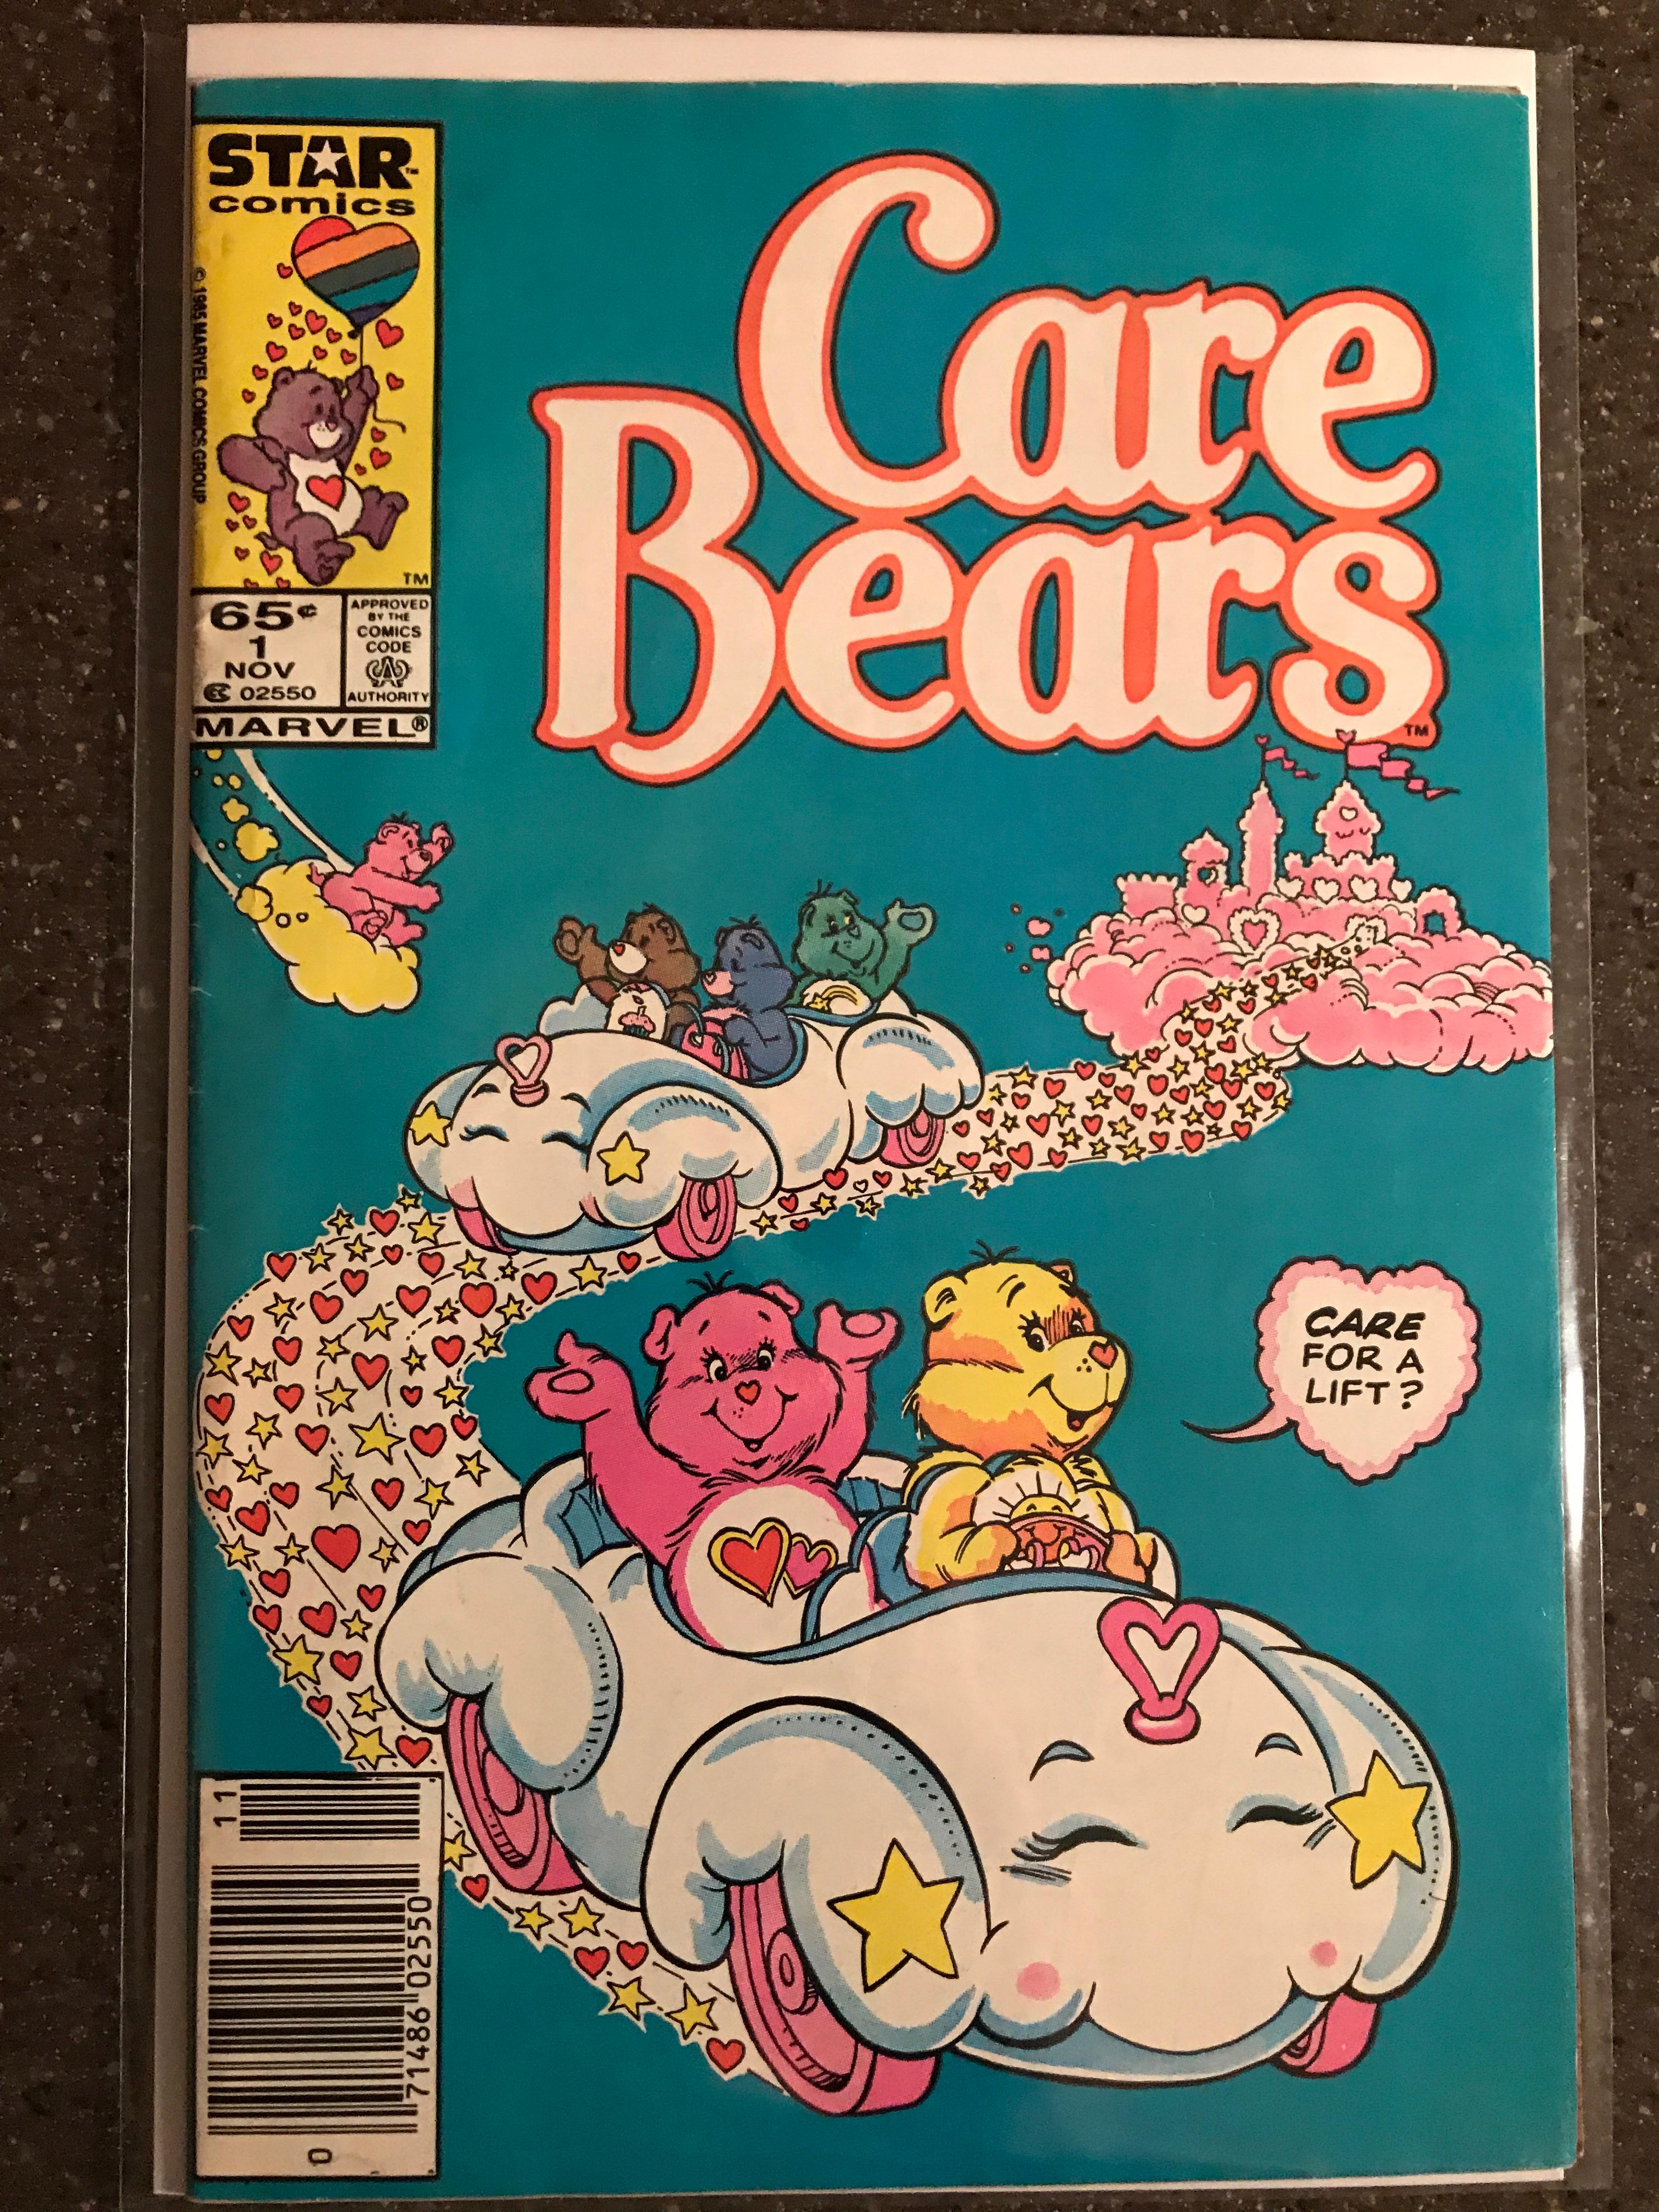 Care Bears Comic #1 Star Comics Marvel Based on the Animated TV Show 1985